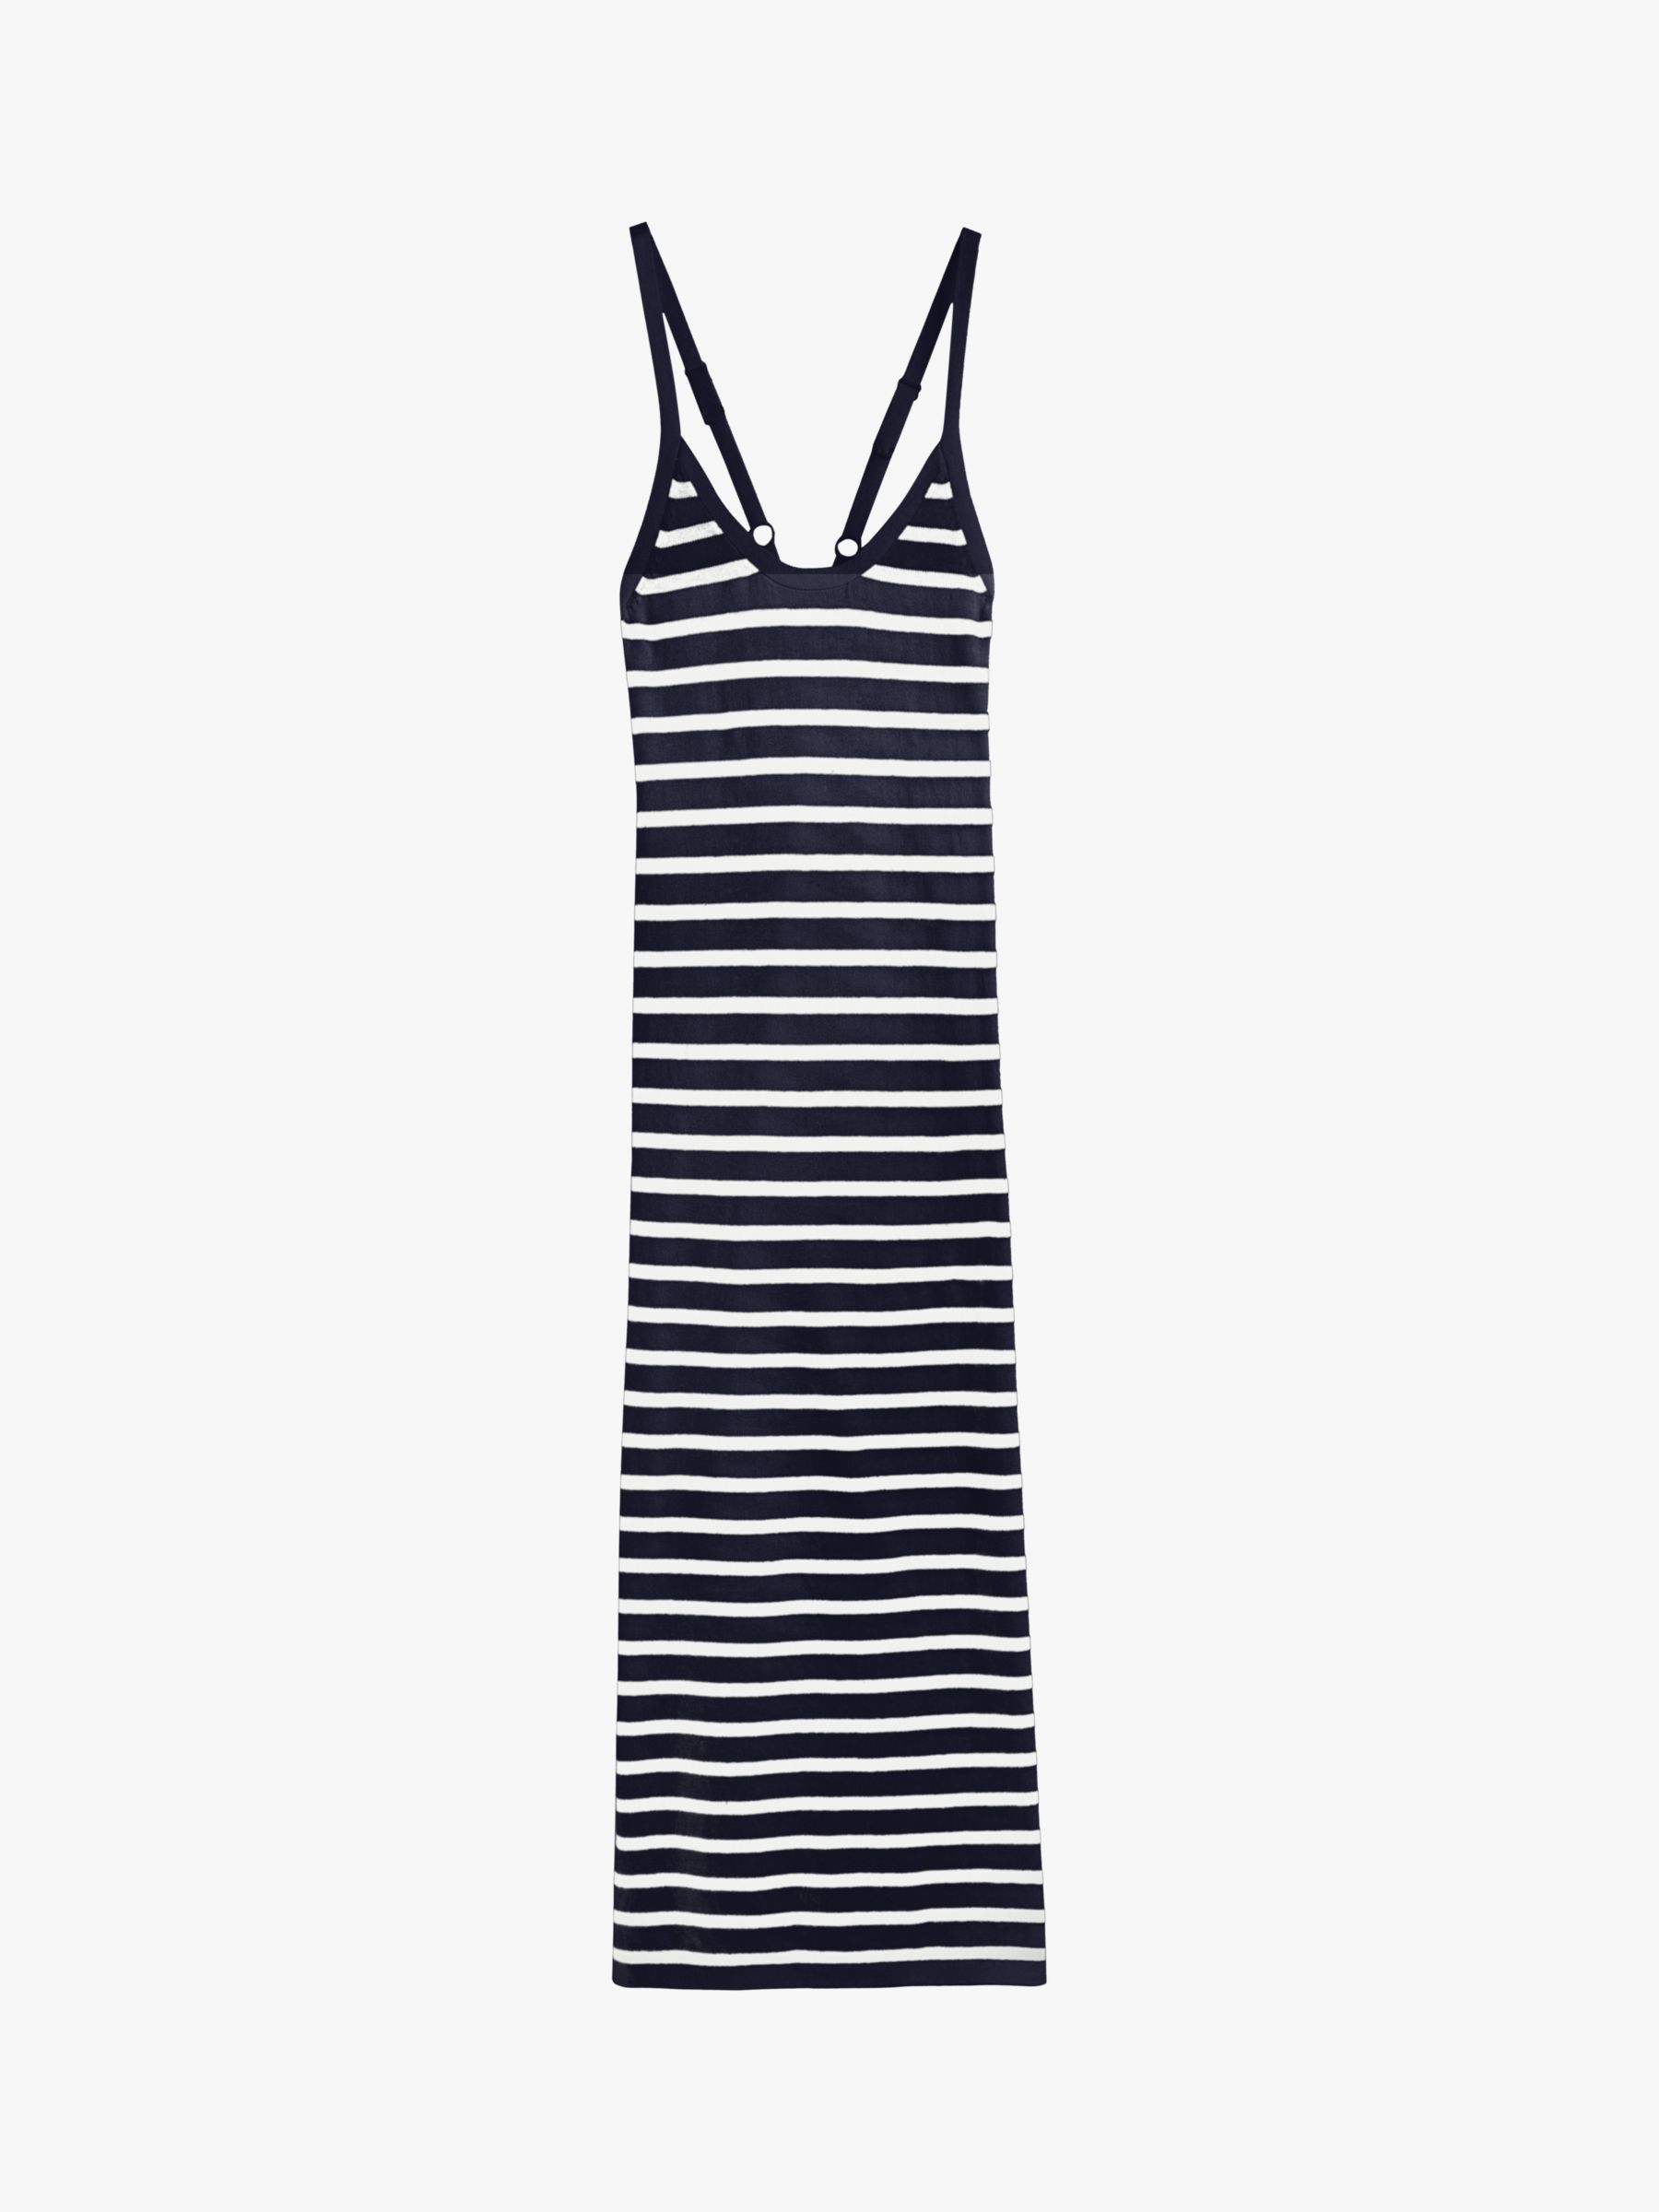 Chinti & Parker Breton Stripe Midi Dress, Navy/Cream, XXL